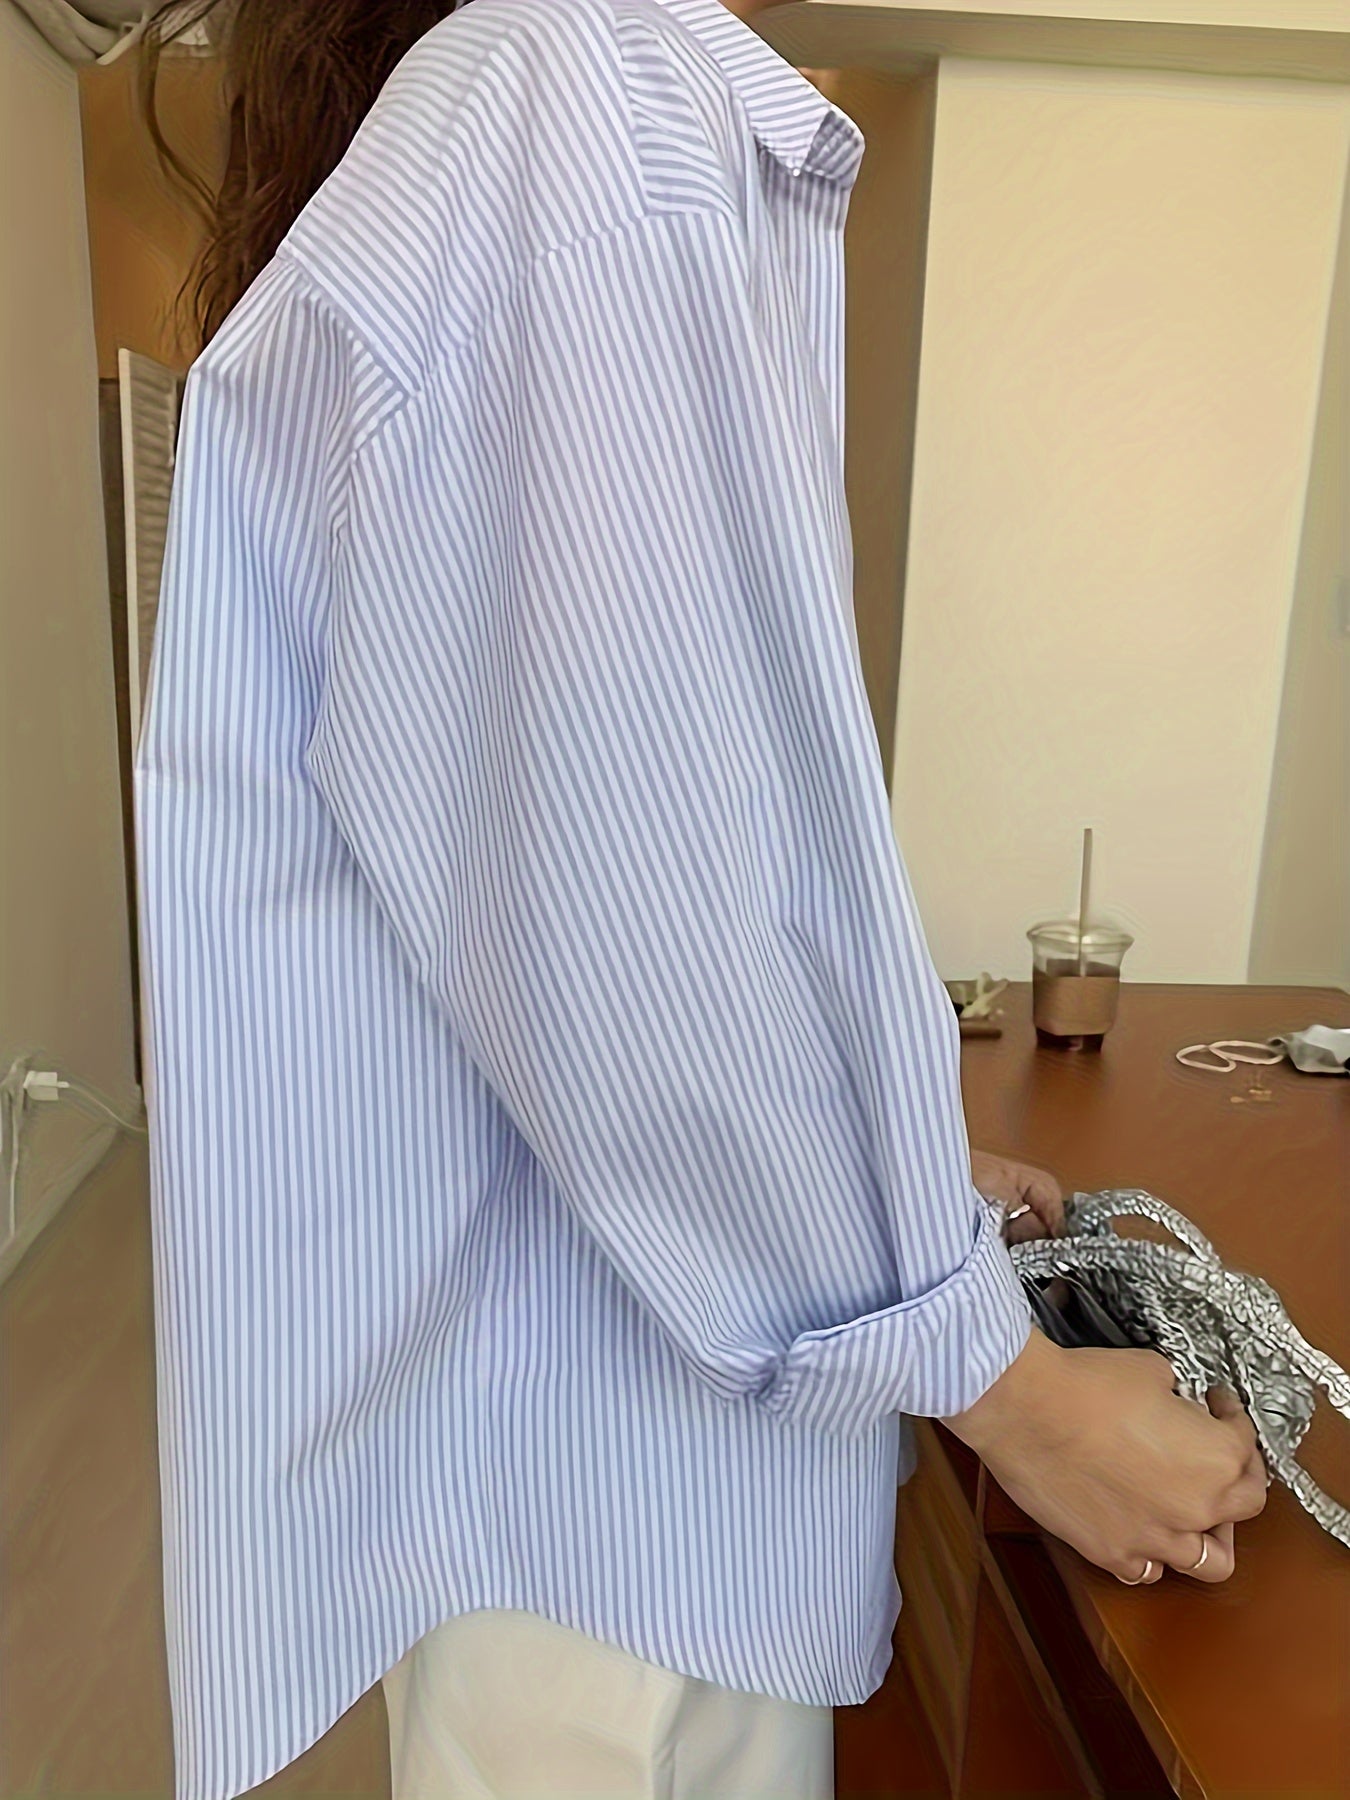 Antmvs Striped Print Patched Pocket Shirt, Vintage Long Sleeve Drop Shoulder Shirt, Women's Clothing